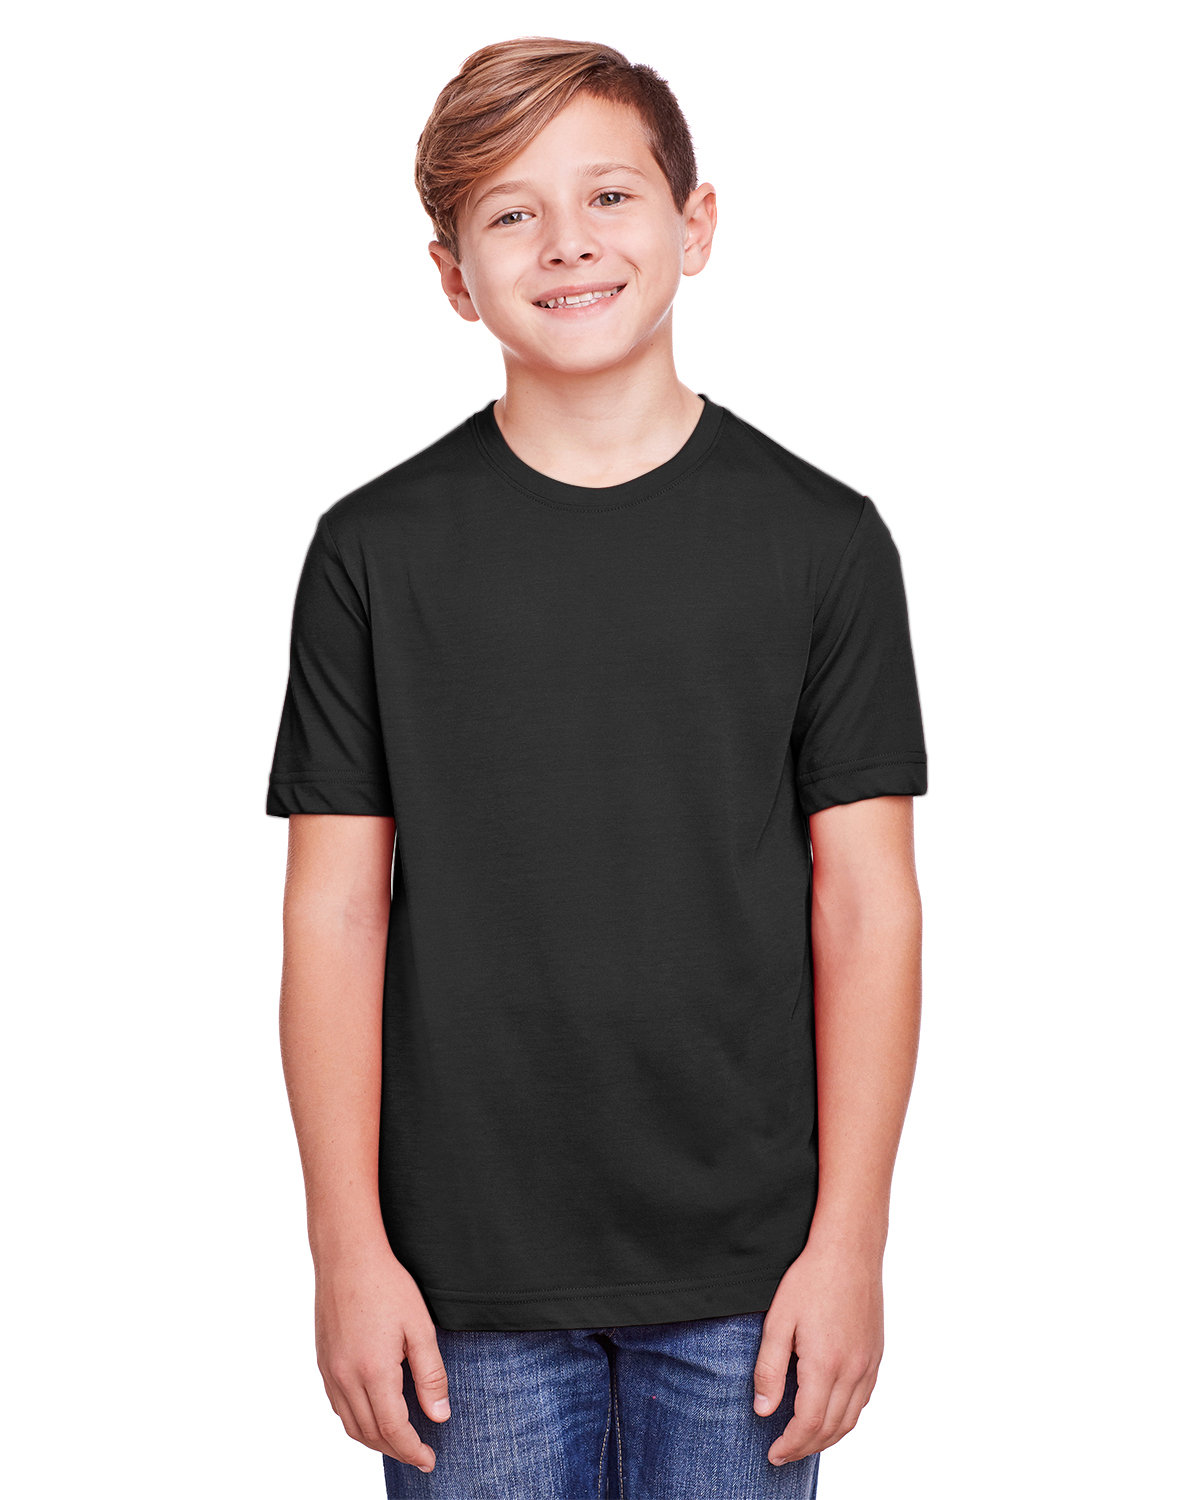 Core 365 Youth Fusion ChromaSoft Performance T-Shirt BLACK 